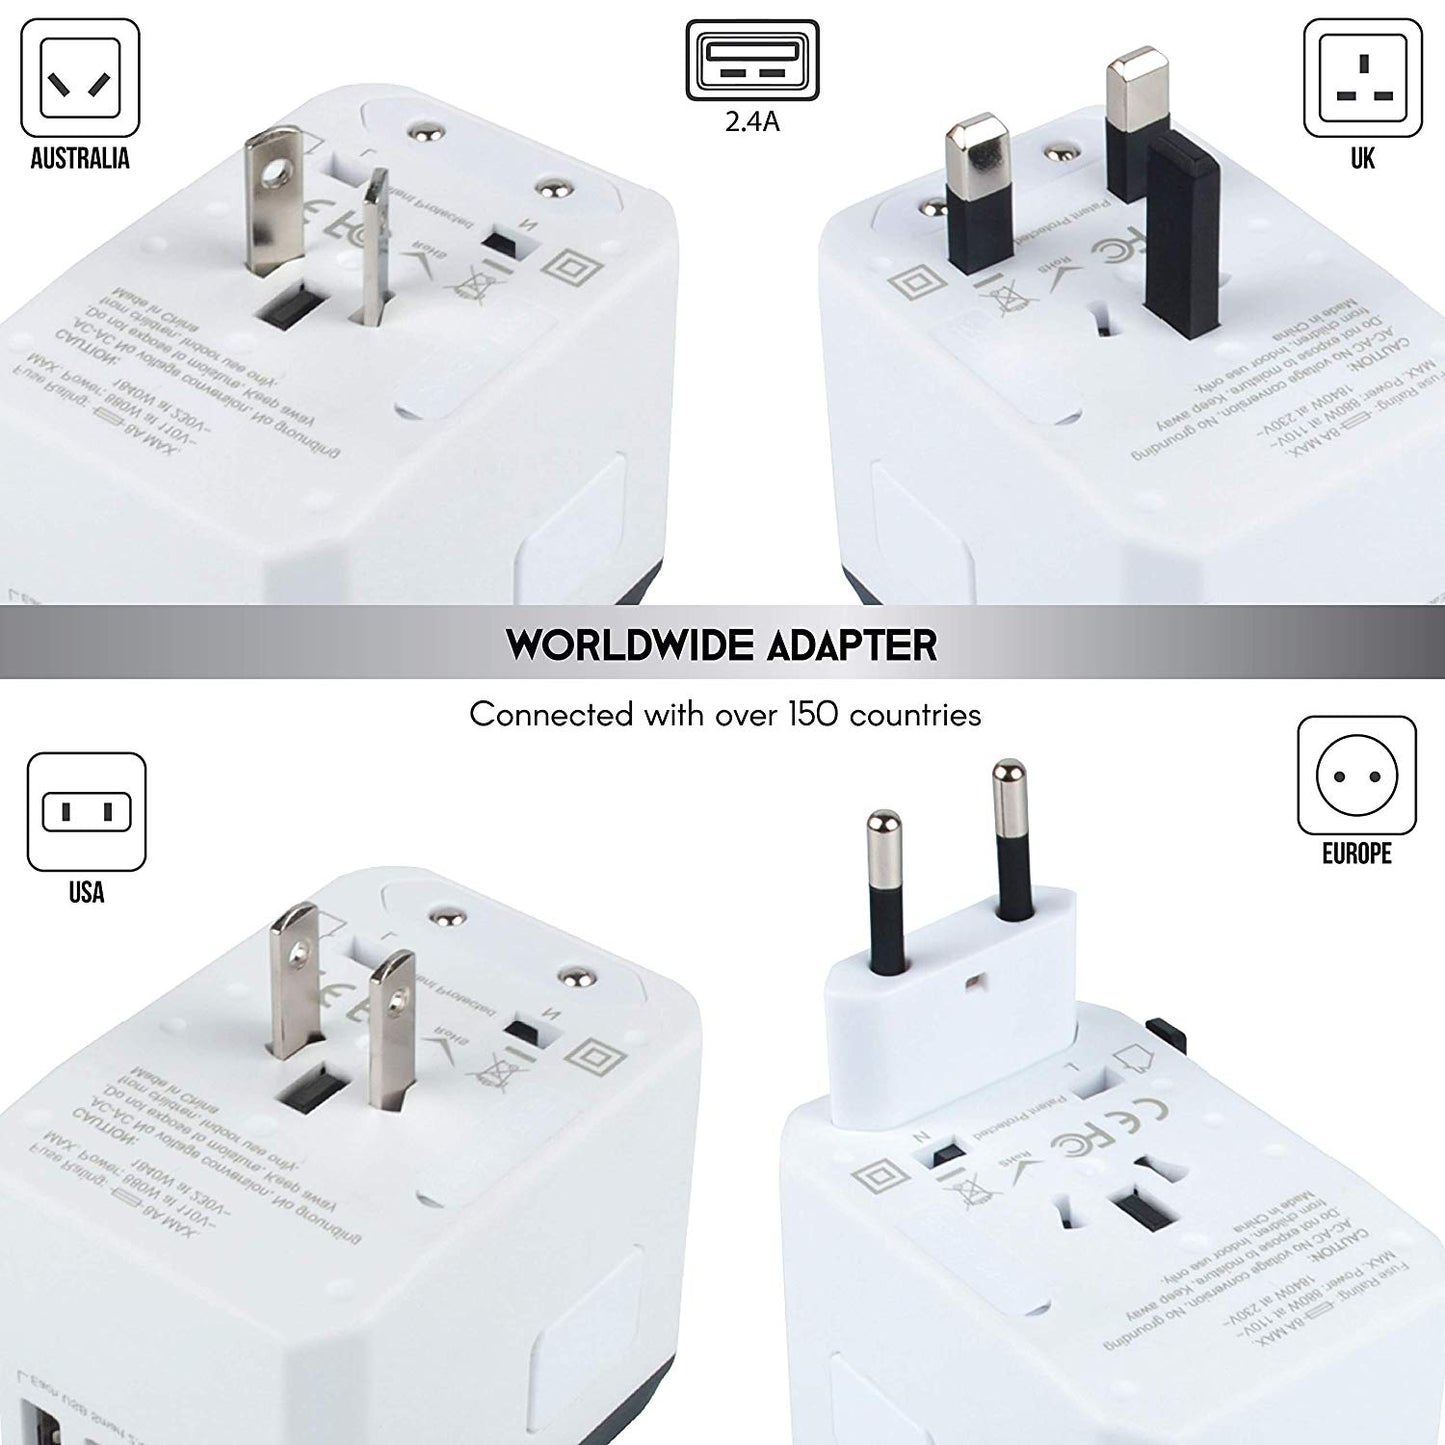 5 USB Ports Power Plug Adapter (White Silver)